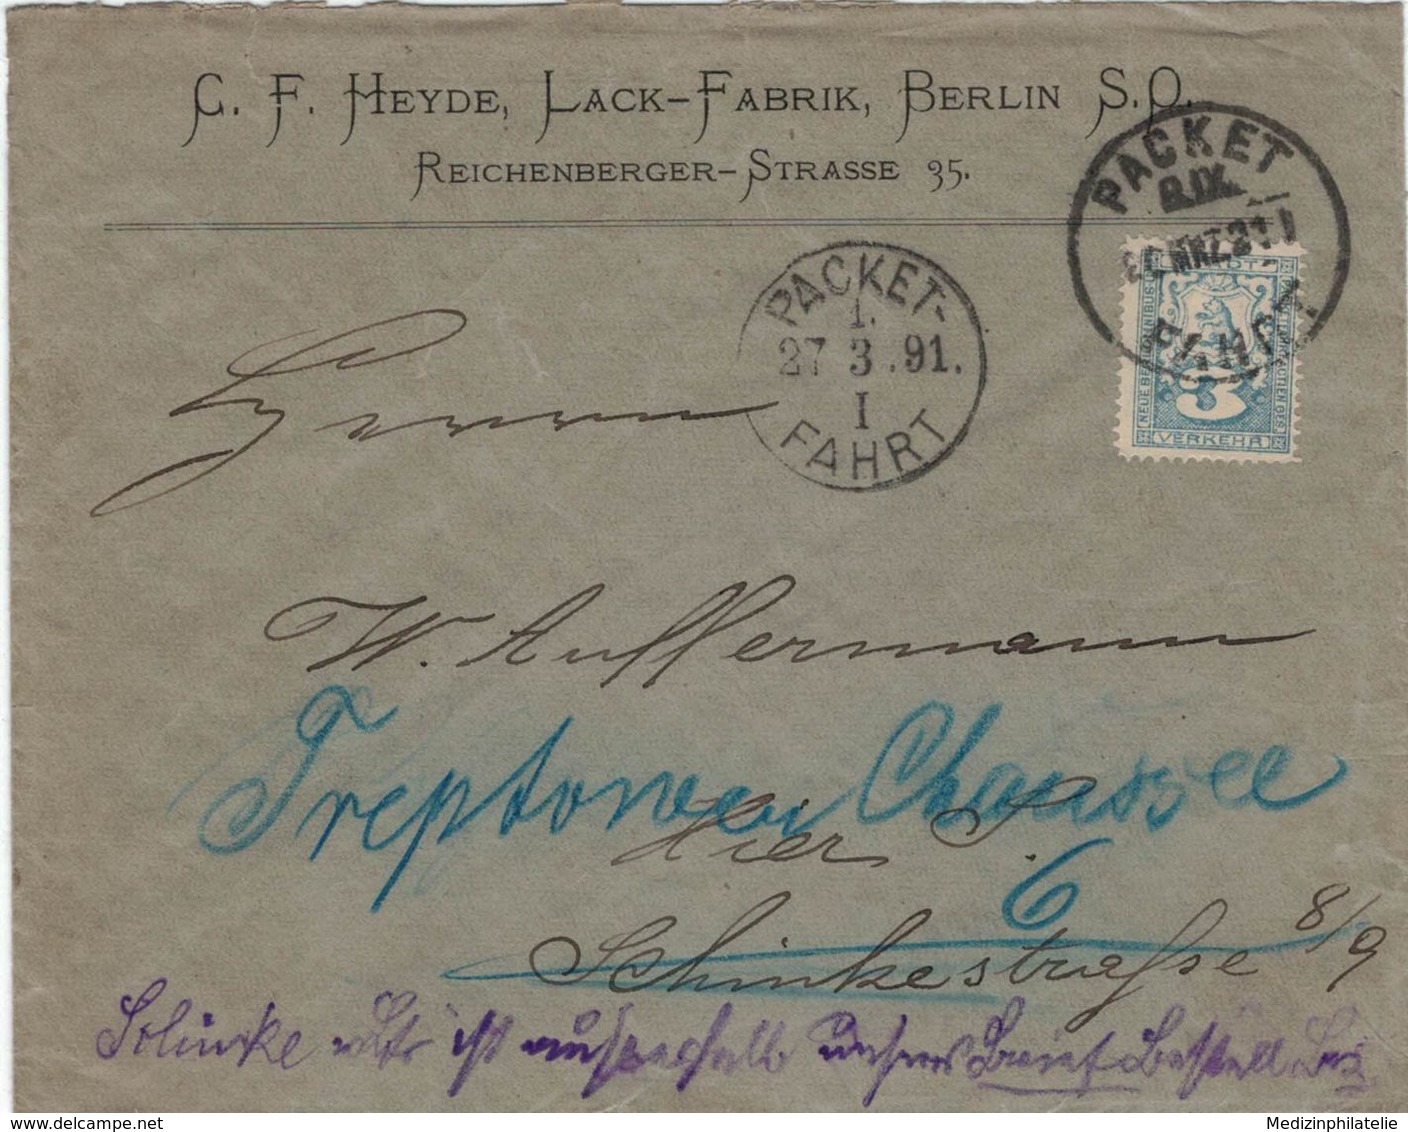 C. F. Heyde - Lack-Fabrik Berlin - Packet-Fahrt 1891 - Privatpost - Pharmazie